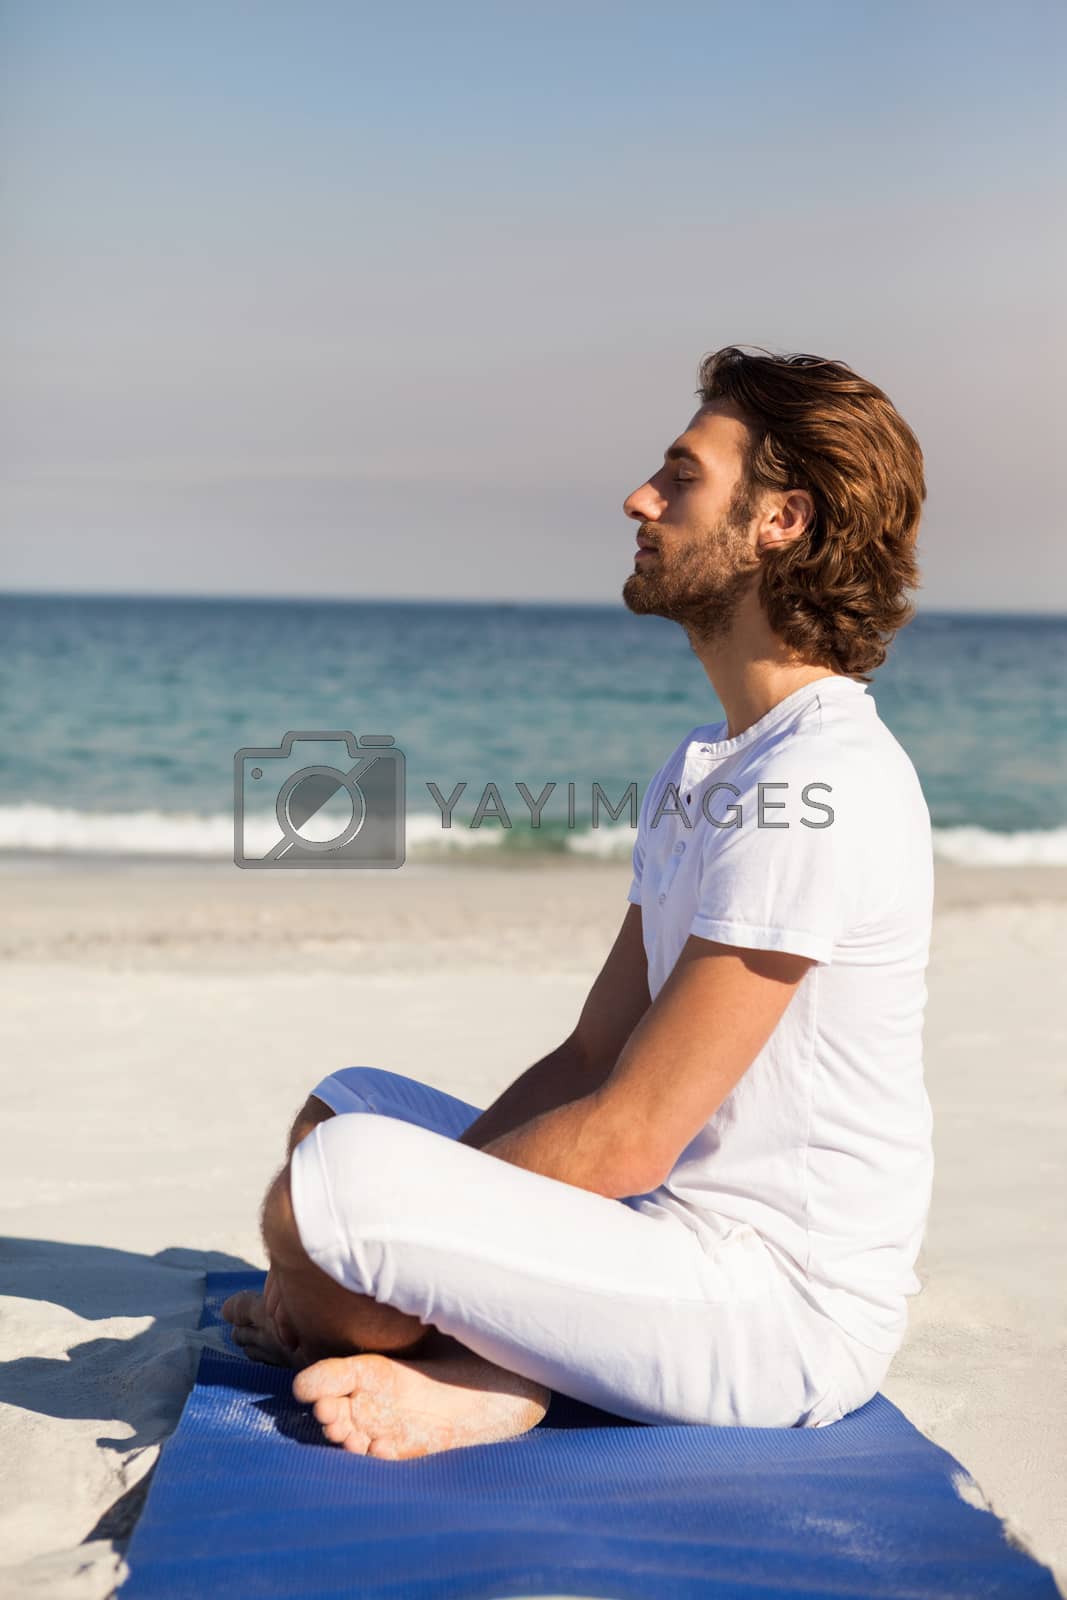 Royalty free image of Man performing yoga at beach by Wavebreakmedia